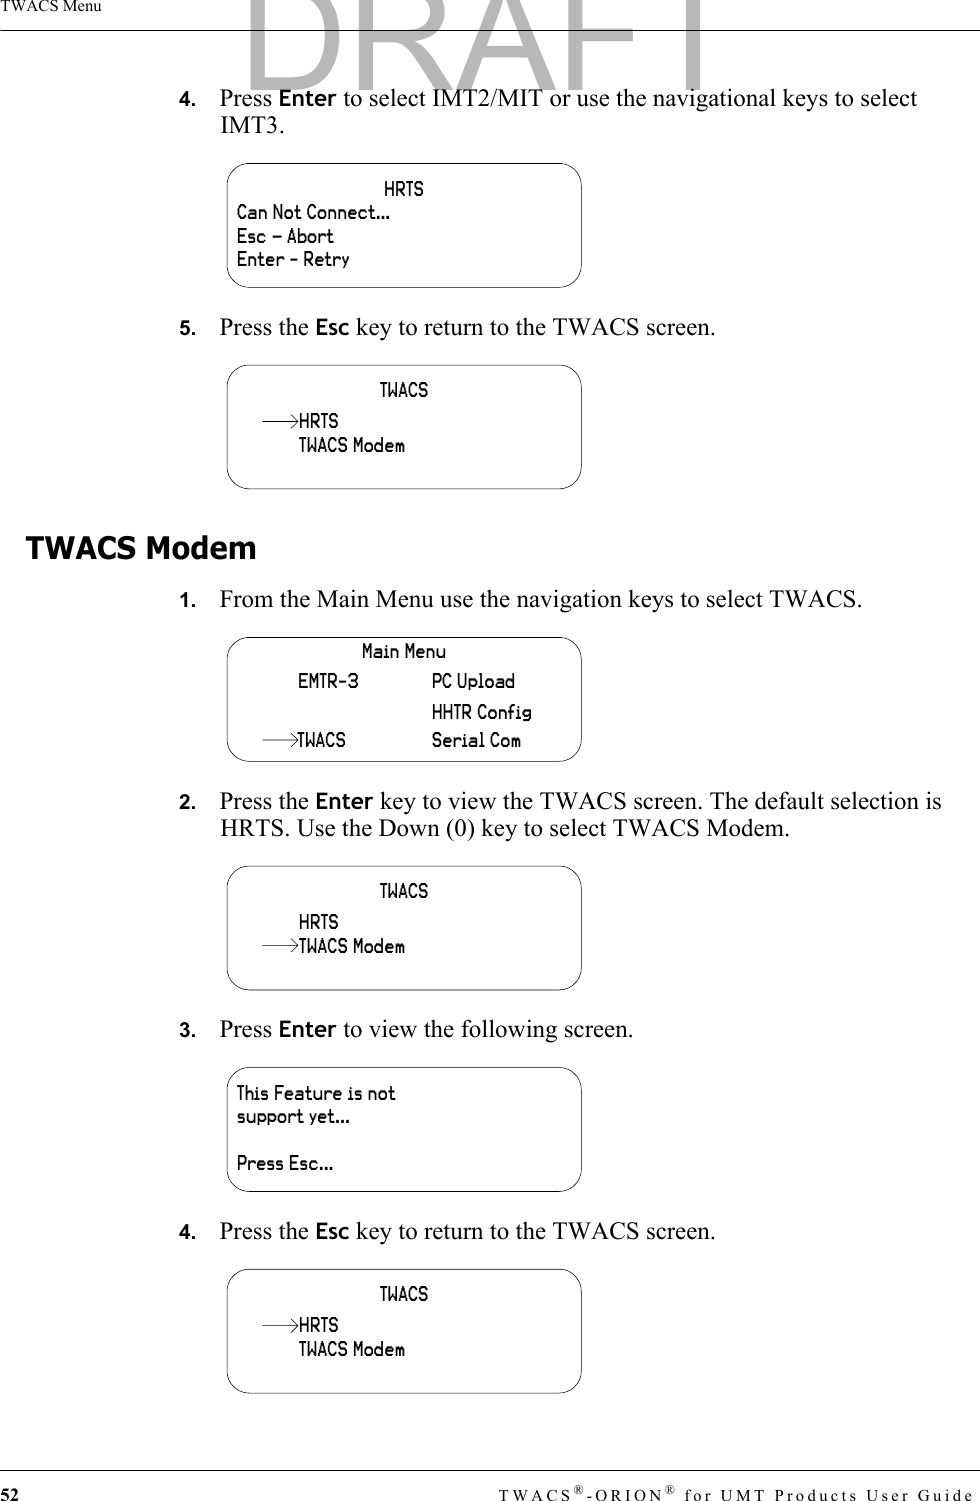 52 TWACS®-ORION® for UMT Products User GuideTWACS Menu4.   Press Enter to select IMT2/MIT or use the navigational keys to select IMT3.5.   Press the Esc key to return to the TWACS screen.TWACS Modem1.   From the Main Menu use the navigation keys to select TWACS.2.   Press the Enter key to view the TWACS screen. The default selection is HRTS. Use the Down (0) key to select TWACS Modem.3.   Press Enter to view the following screen.4.   Press the Esc key to return to the TWACS screen.HRTSCan Not Connect…Esc – AbortEnter - RetryTWACSTWACS ModemHRTSMain MenuHHTR ConfigSerial ComPC UploadEMTR-3TWACSTWACSHRTSTWACS ModemThis Feature is not support yet...Press Esc...TWACSTWACS ModemHRTSDRAFT